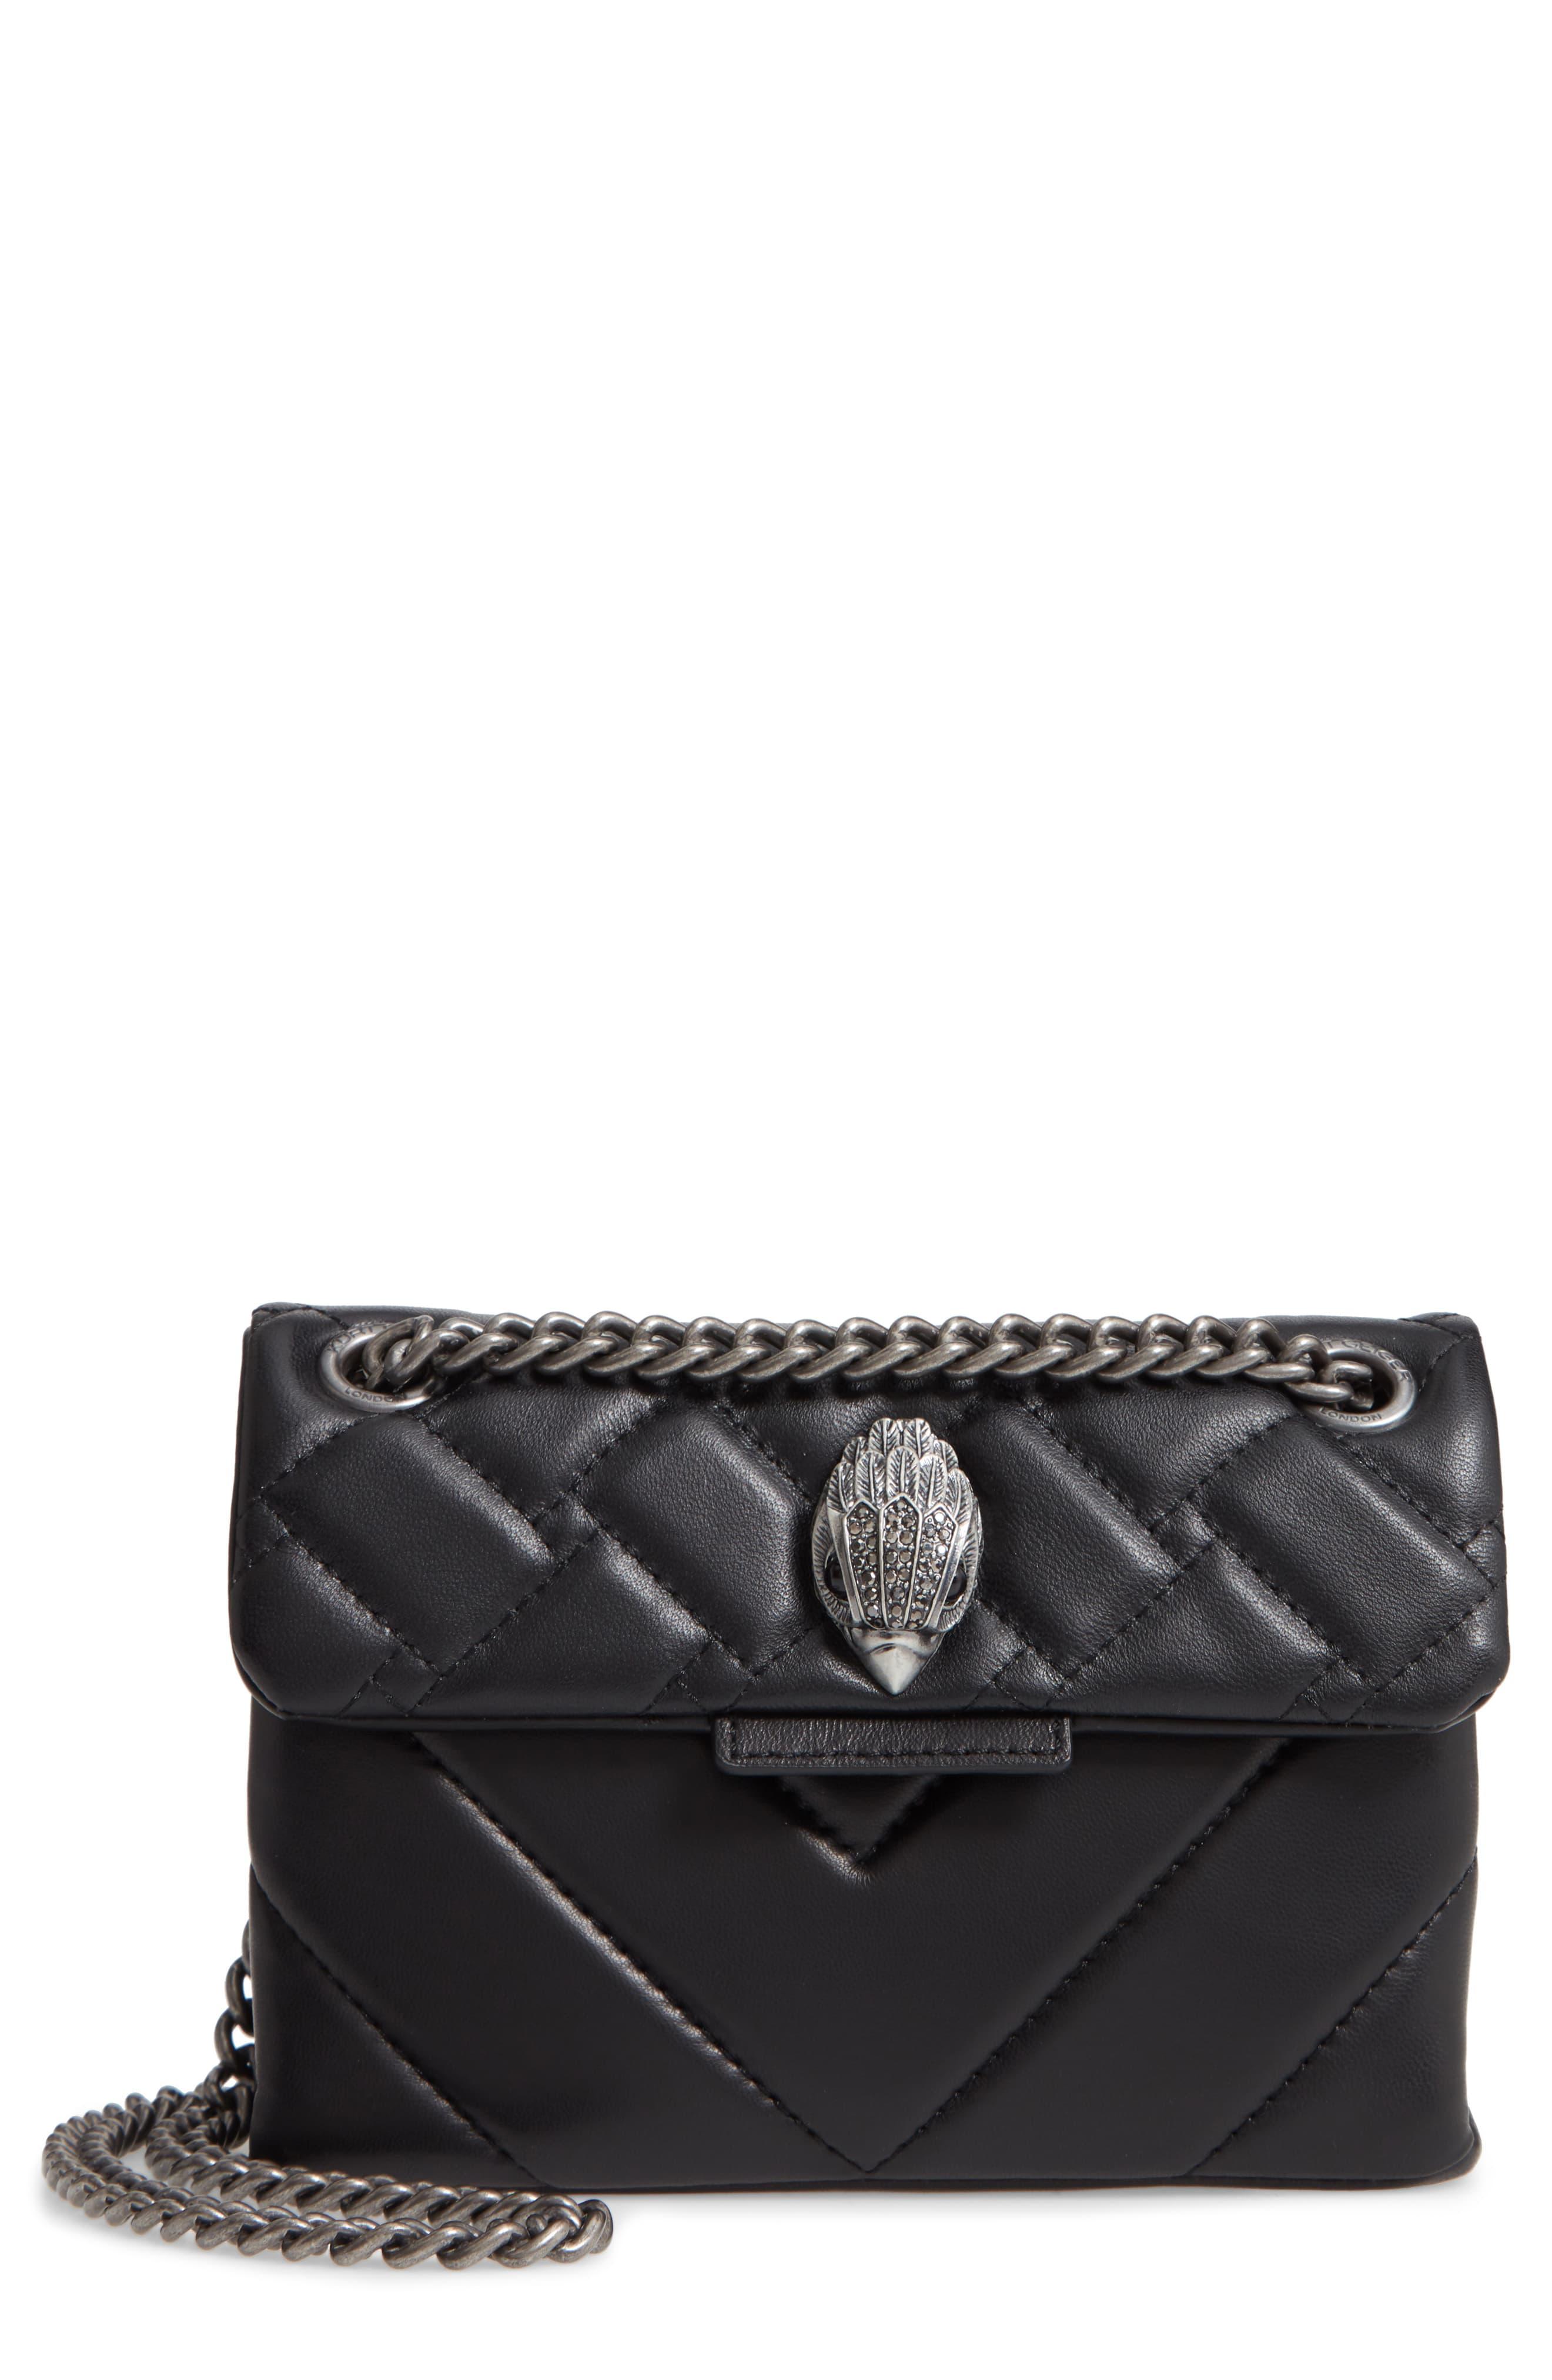 Kurt Geiger Mini Kensington Quilted Leather Crossbody Bag in Black ...